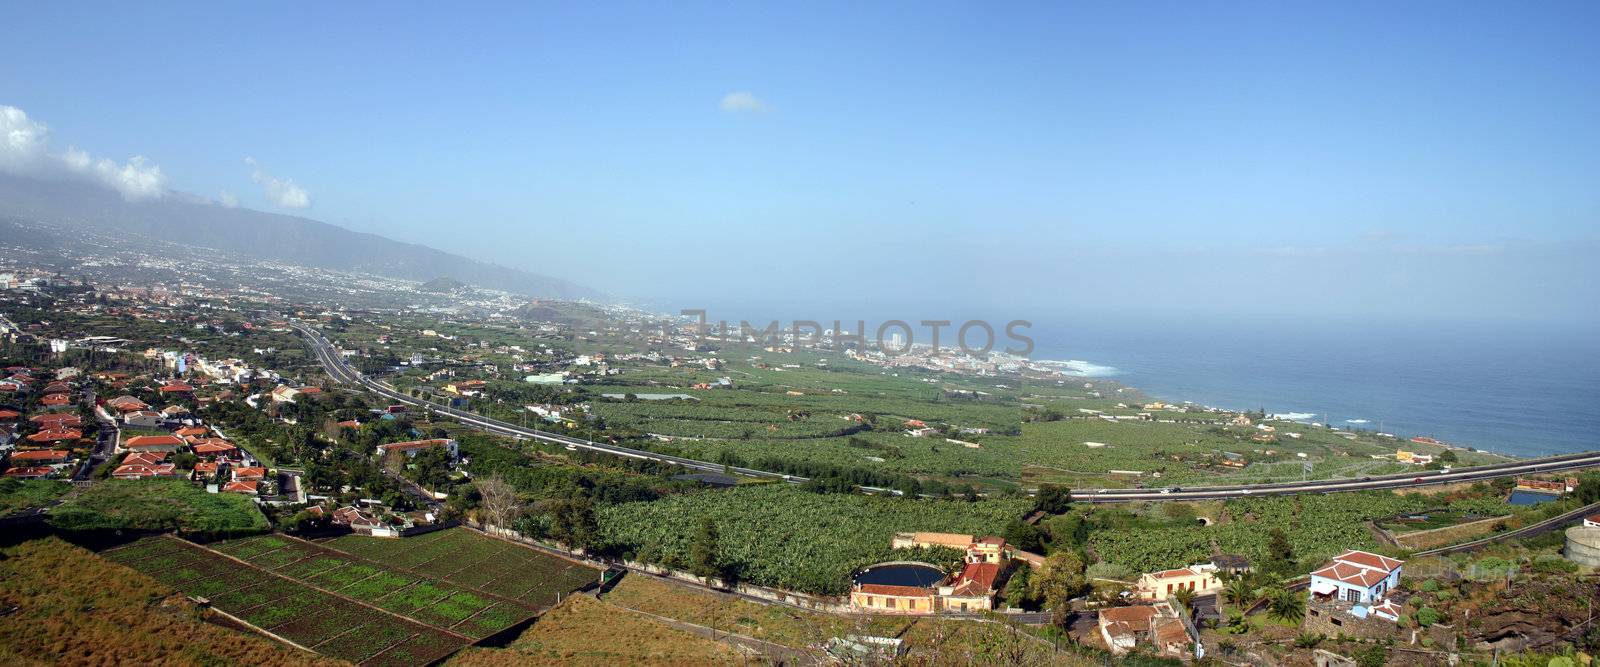 Tenerife landscape by watchtheworld